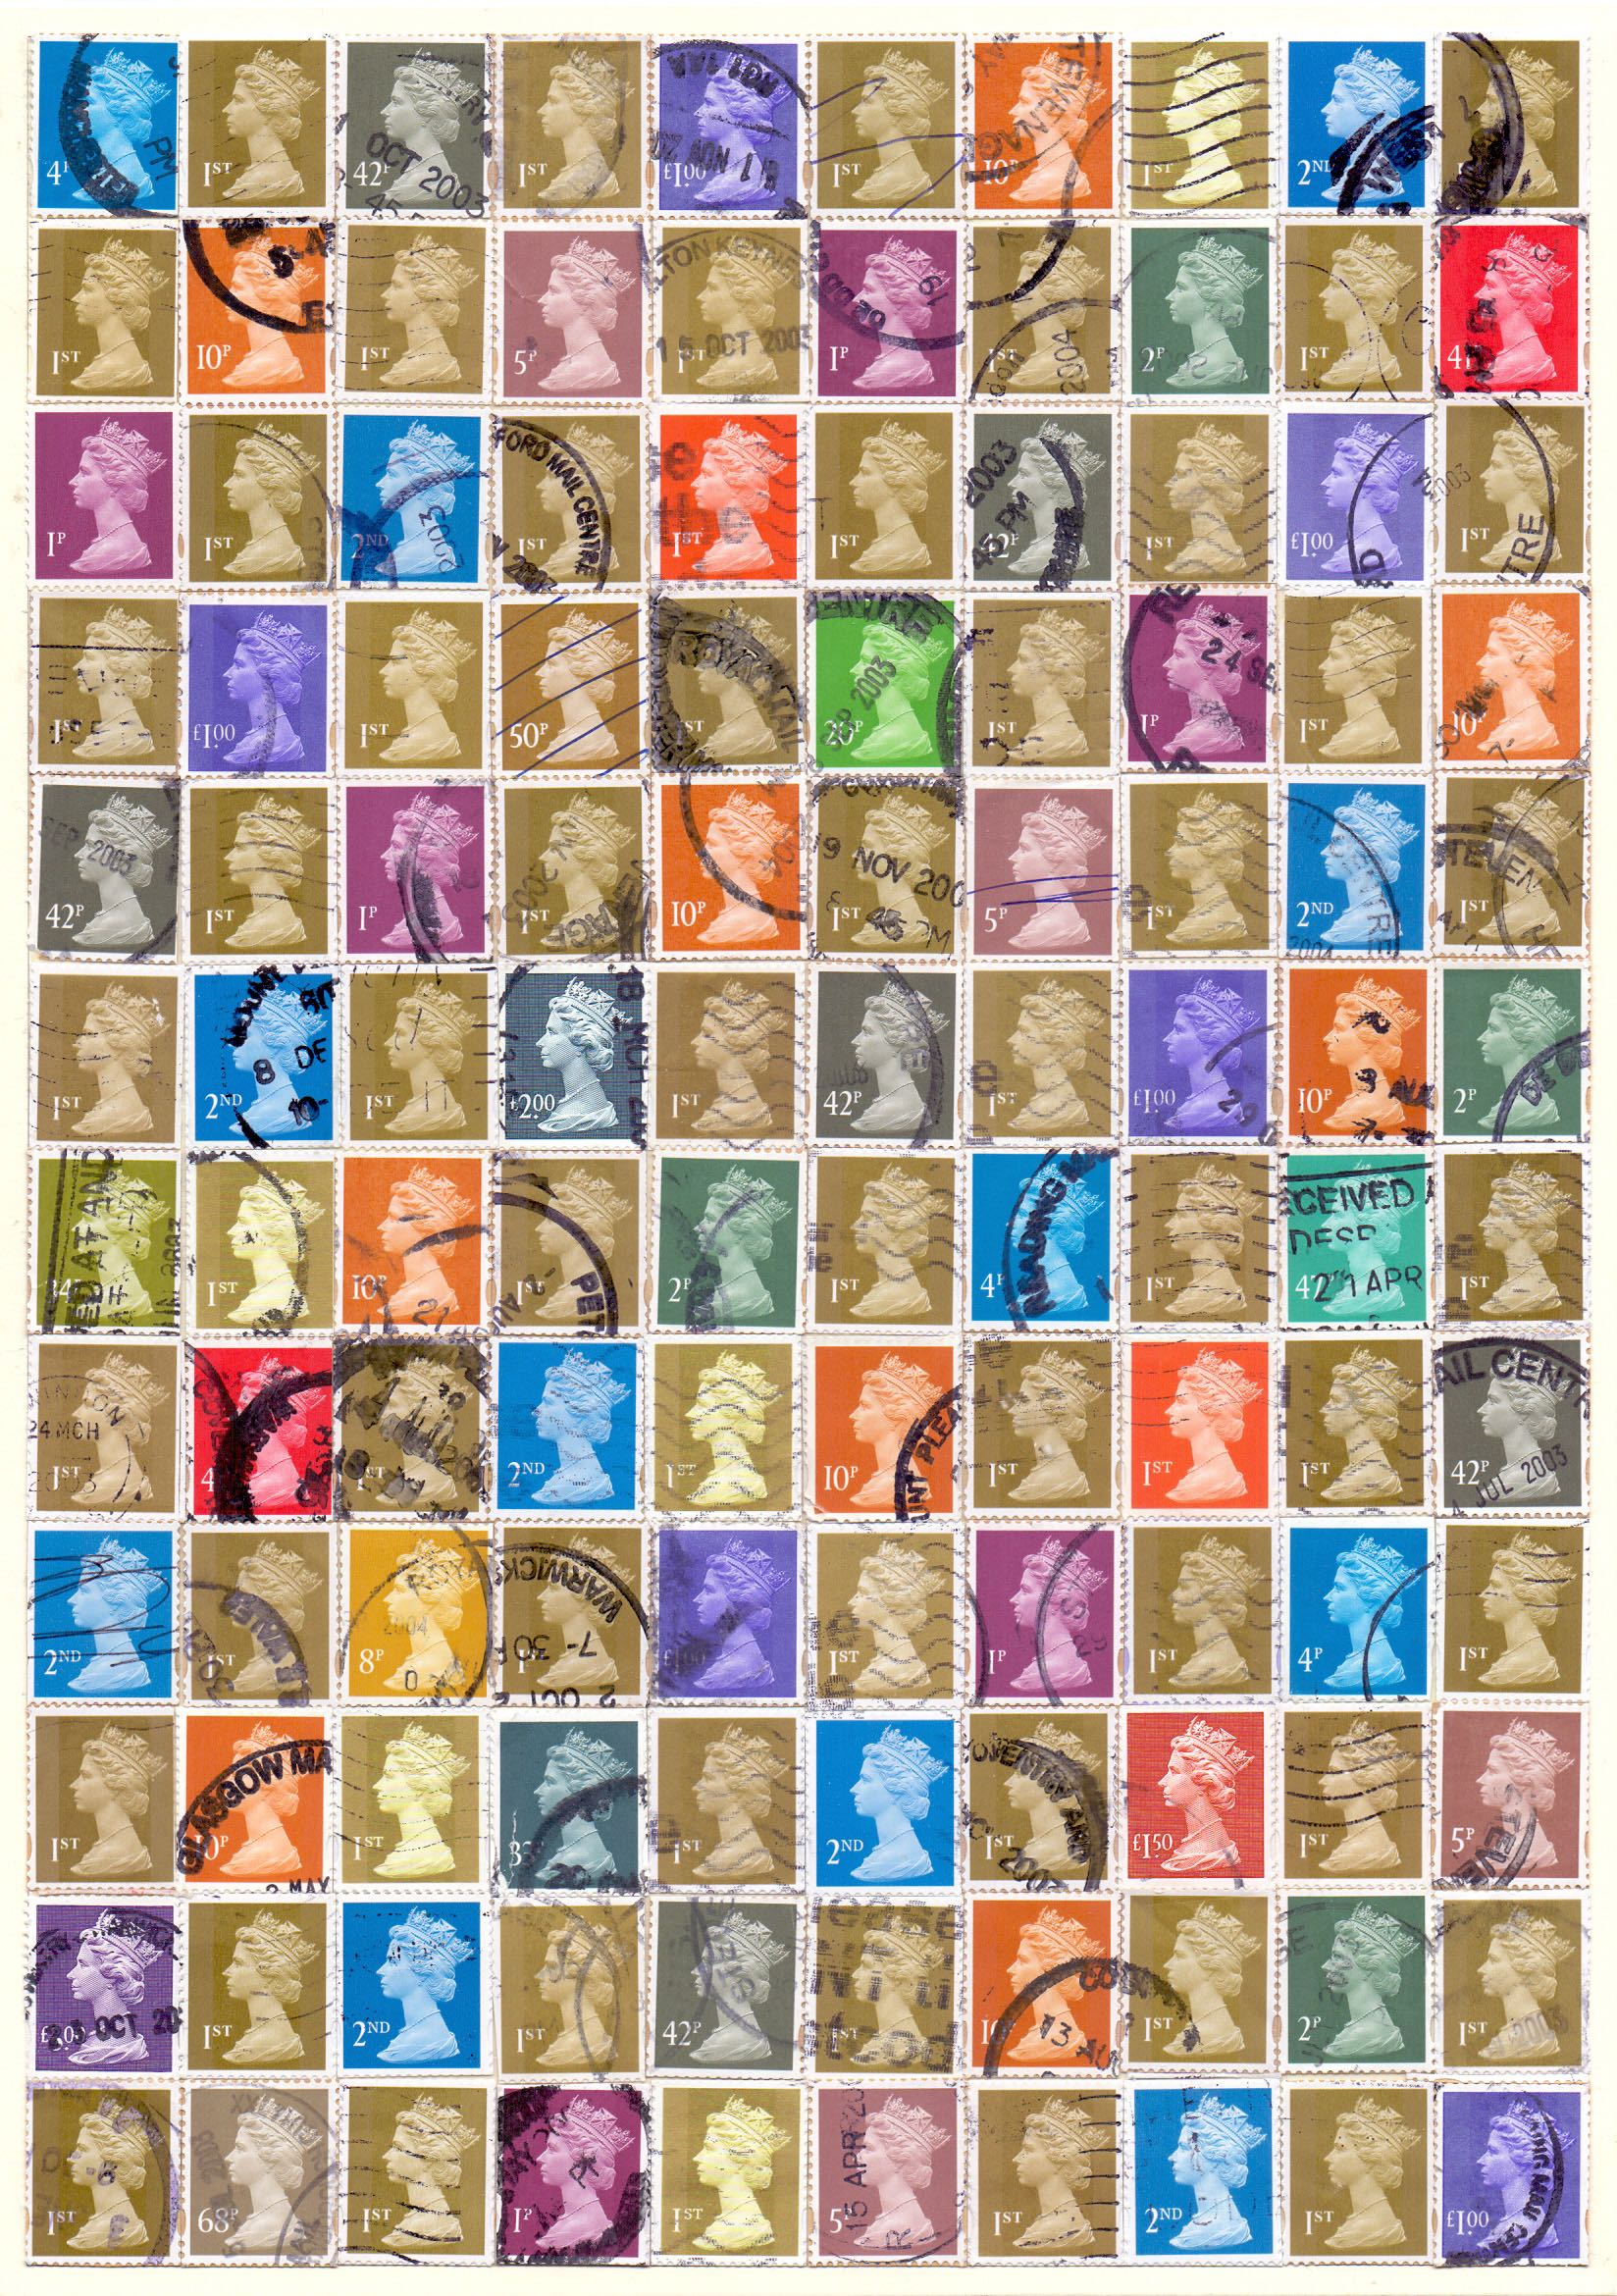 Károly Keserü - Untitled (1507011), XXth Century Series: Andy Warhol, Stamp Series: Queen Elizabeth II, paper collage, 30 x 21 cm, 2015